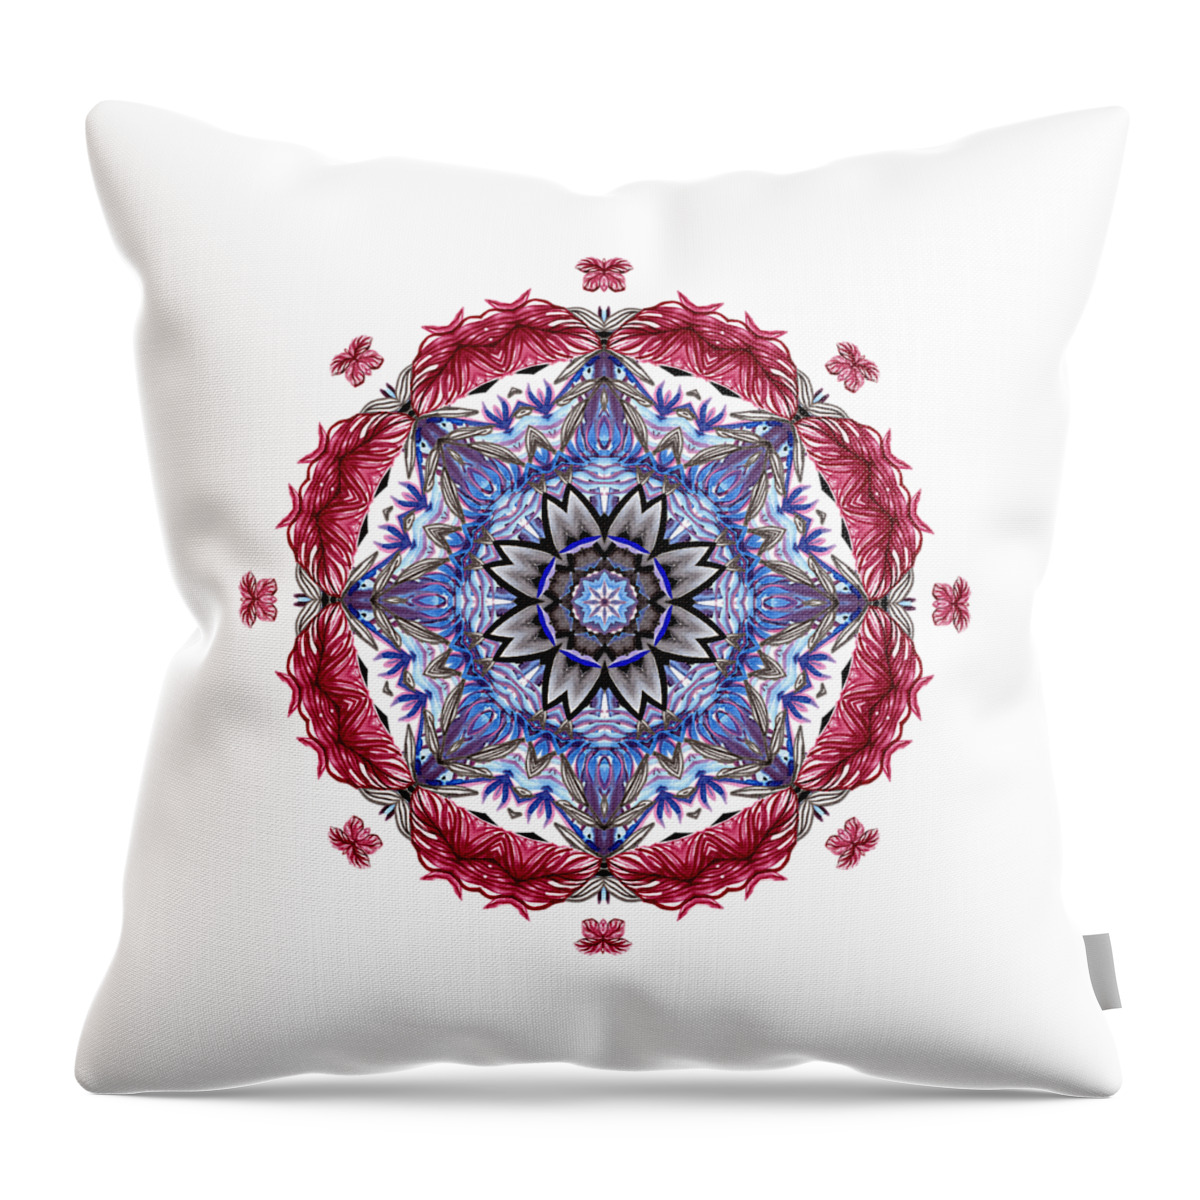 Tropical Mandala Throw Pillow featuring the digital art Tropical Mandala by Kaye Menner by Kaye Menner